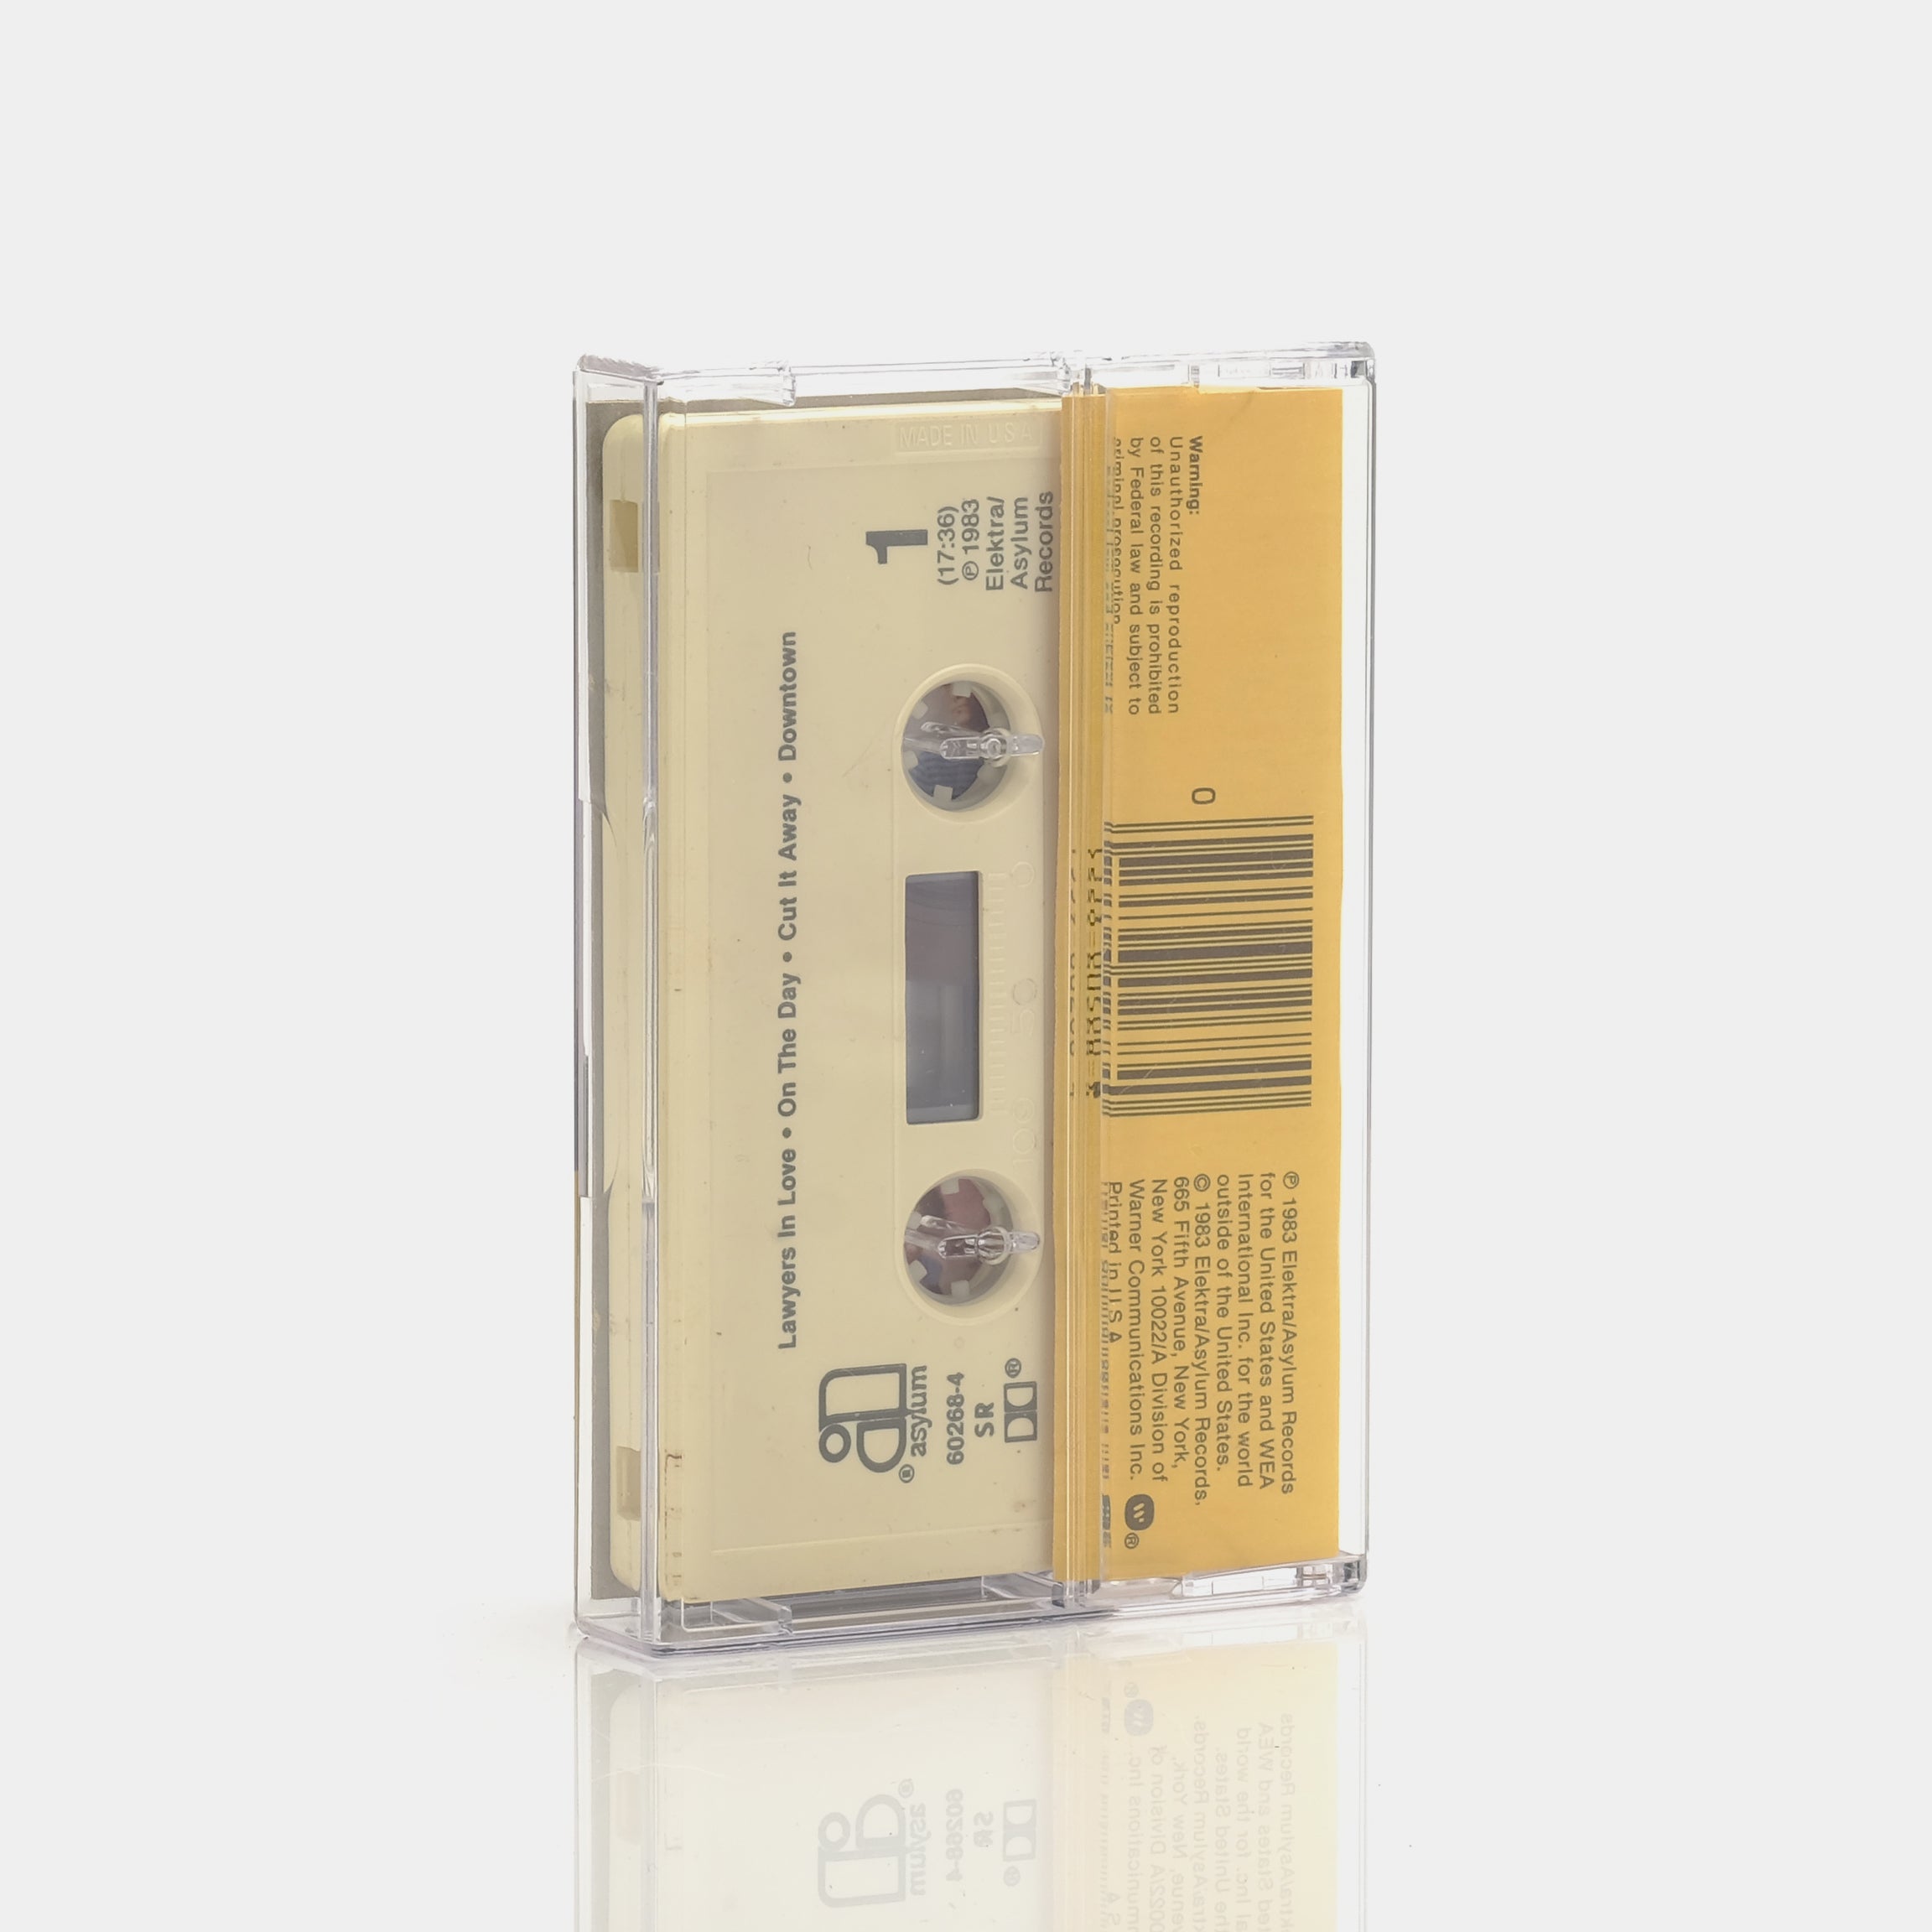 Jackson Browne - Lawyers In Love Cassette Tape